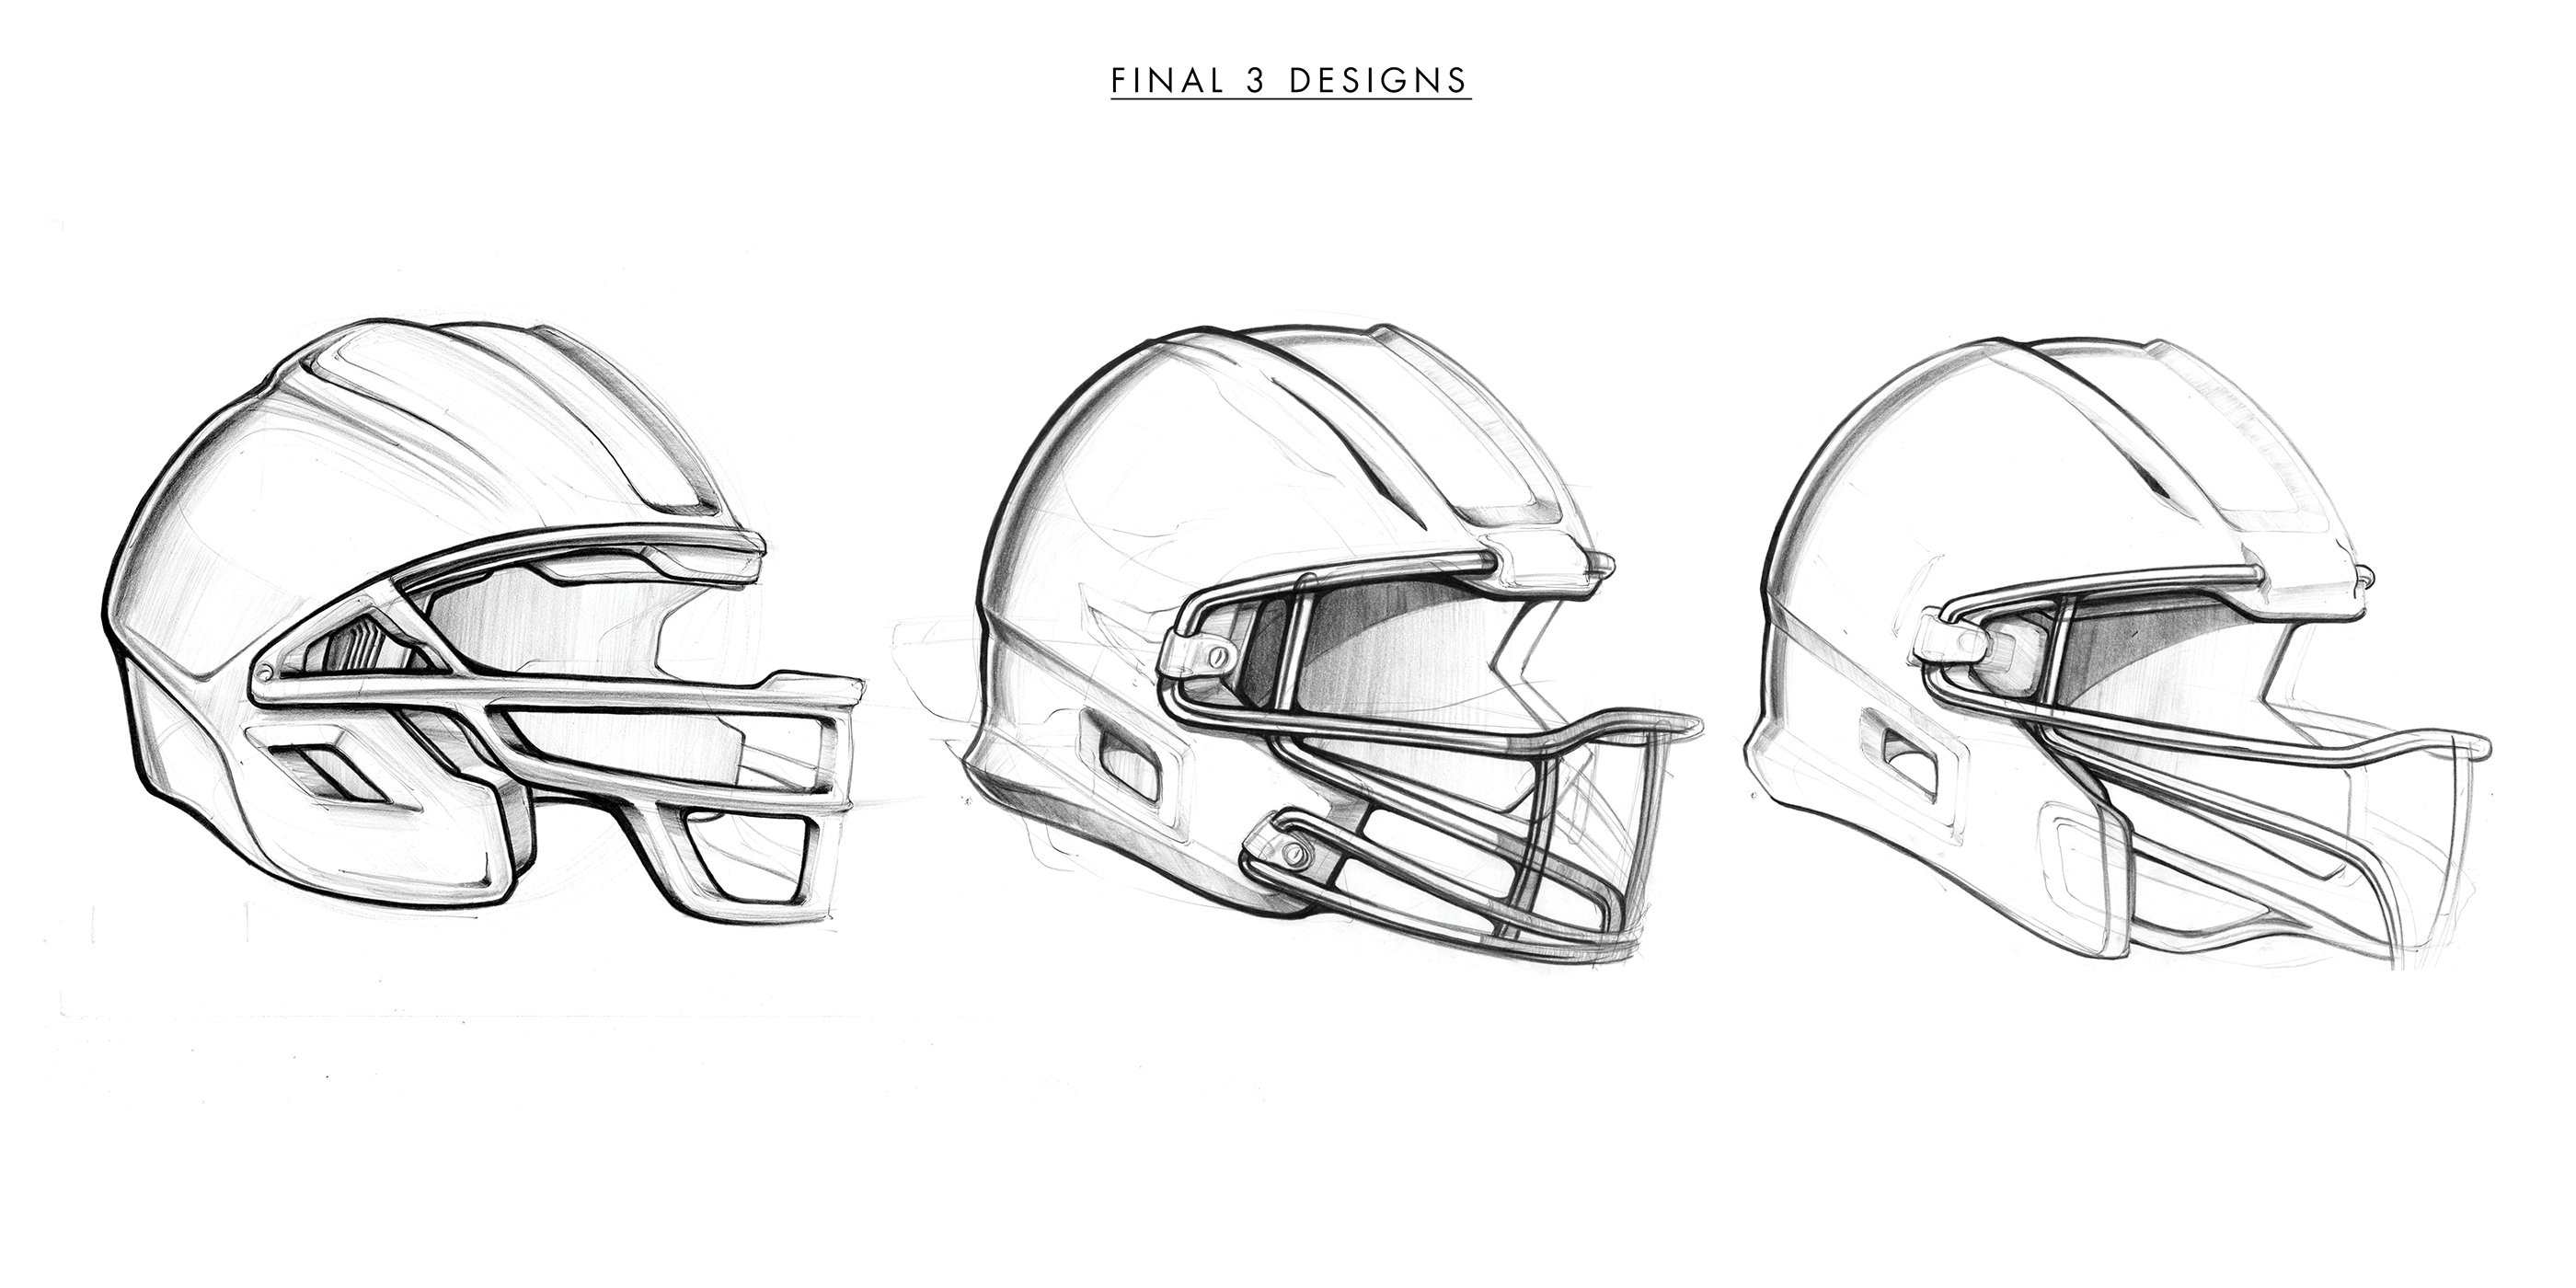 xenithdna橄榄球头盔设计更好更舒适